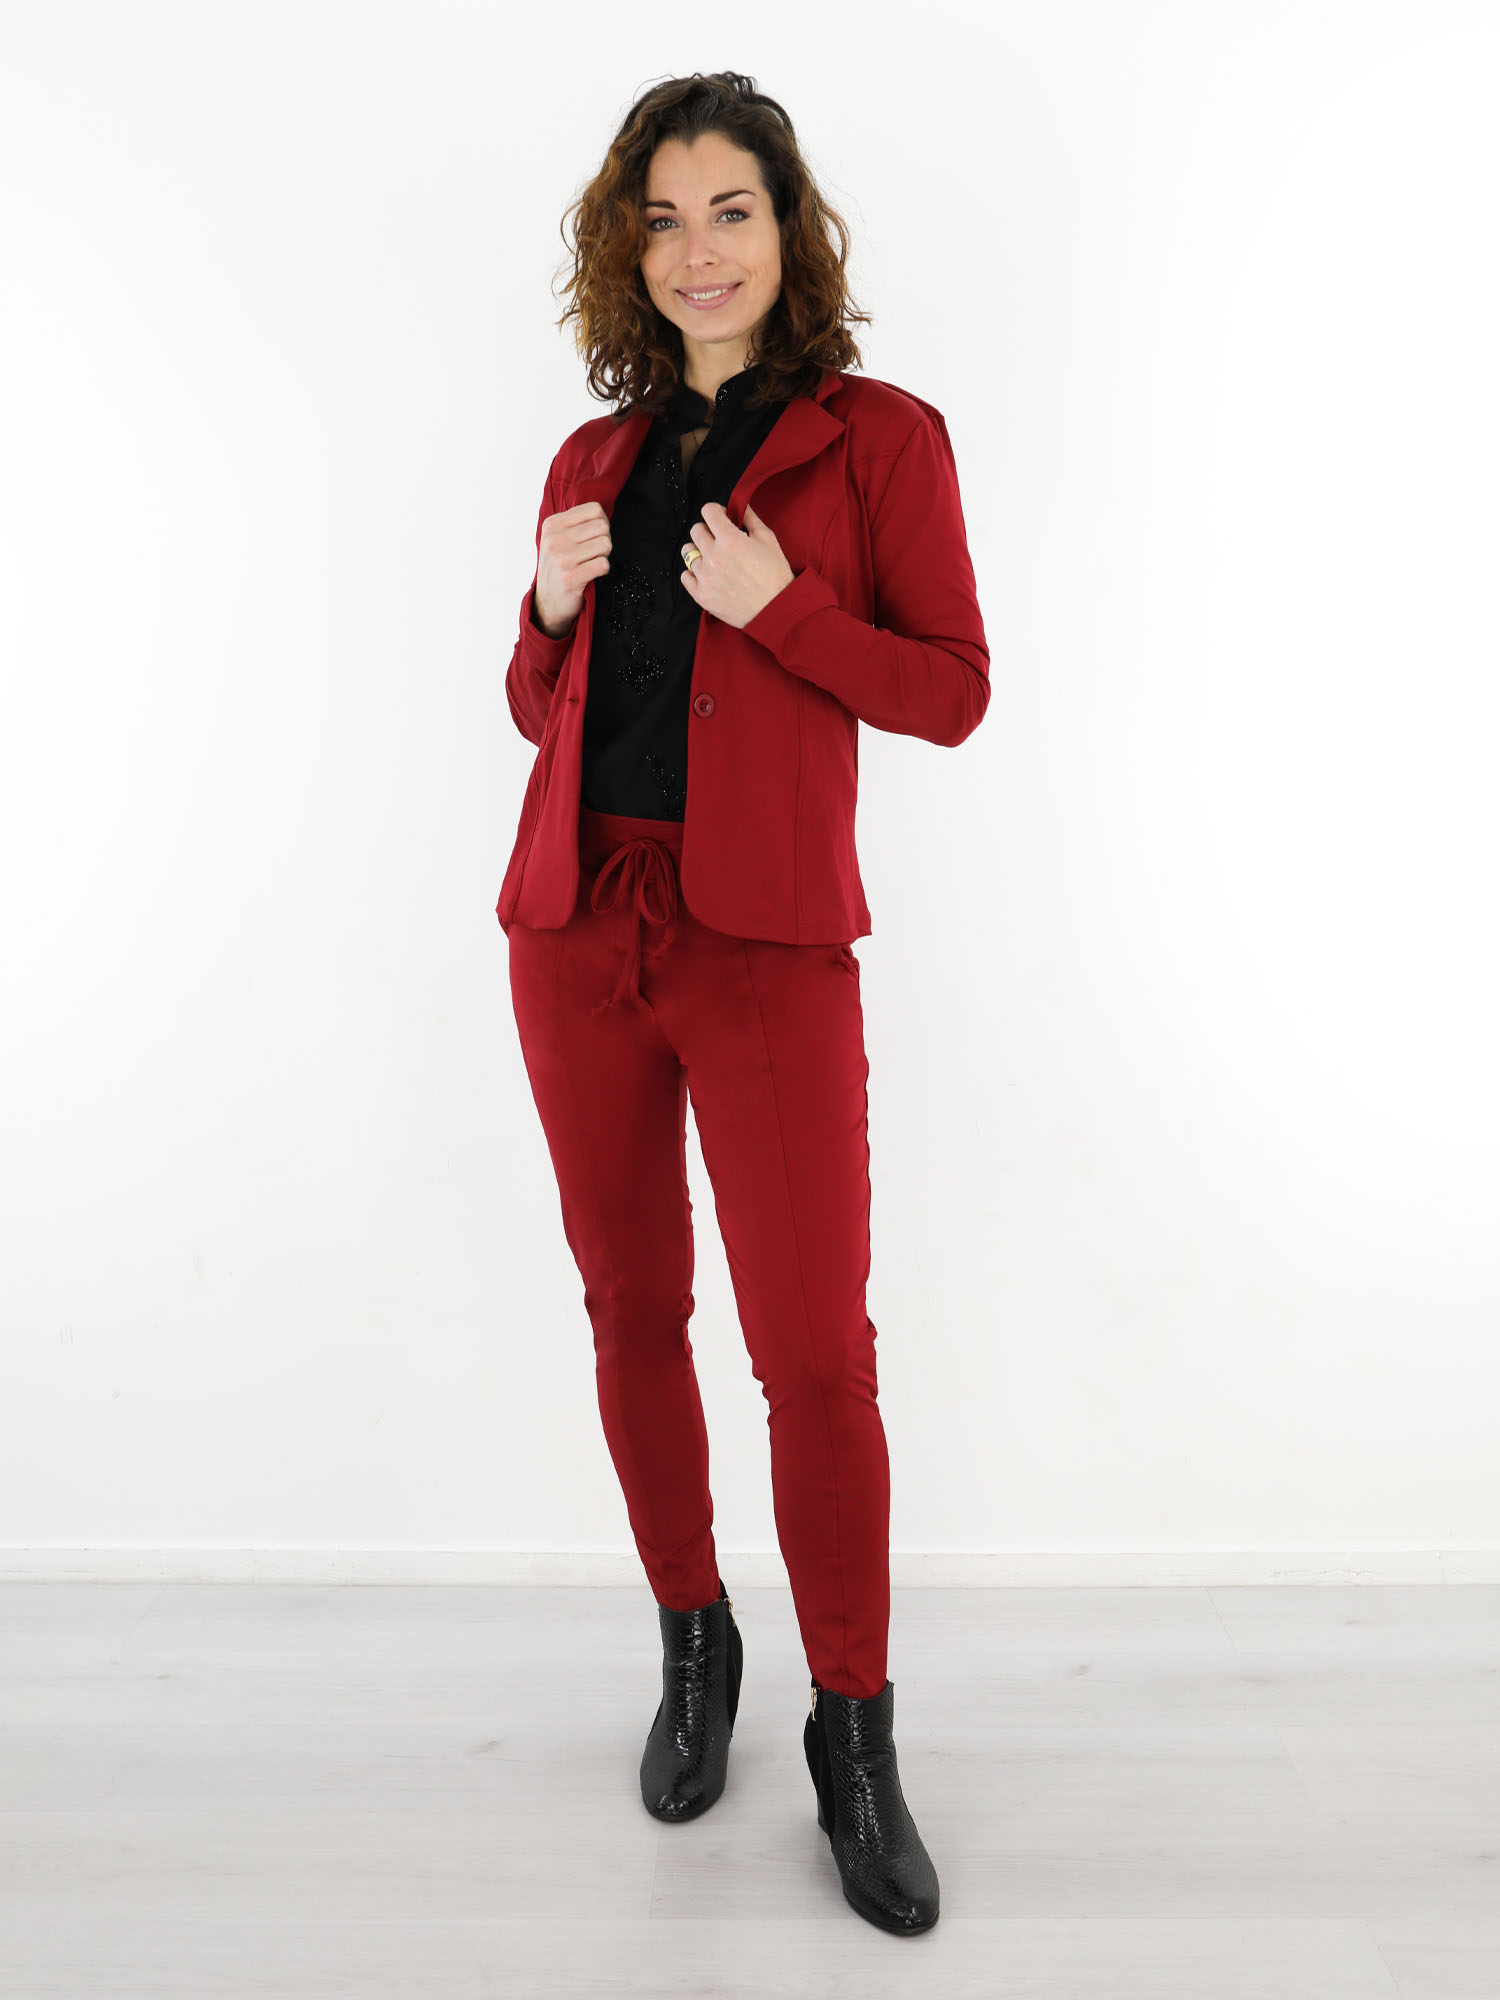 neutrale programma Toegeven Bordeaux rode travelstof broek van Thombiq - Fashion to Fashion